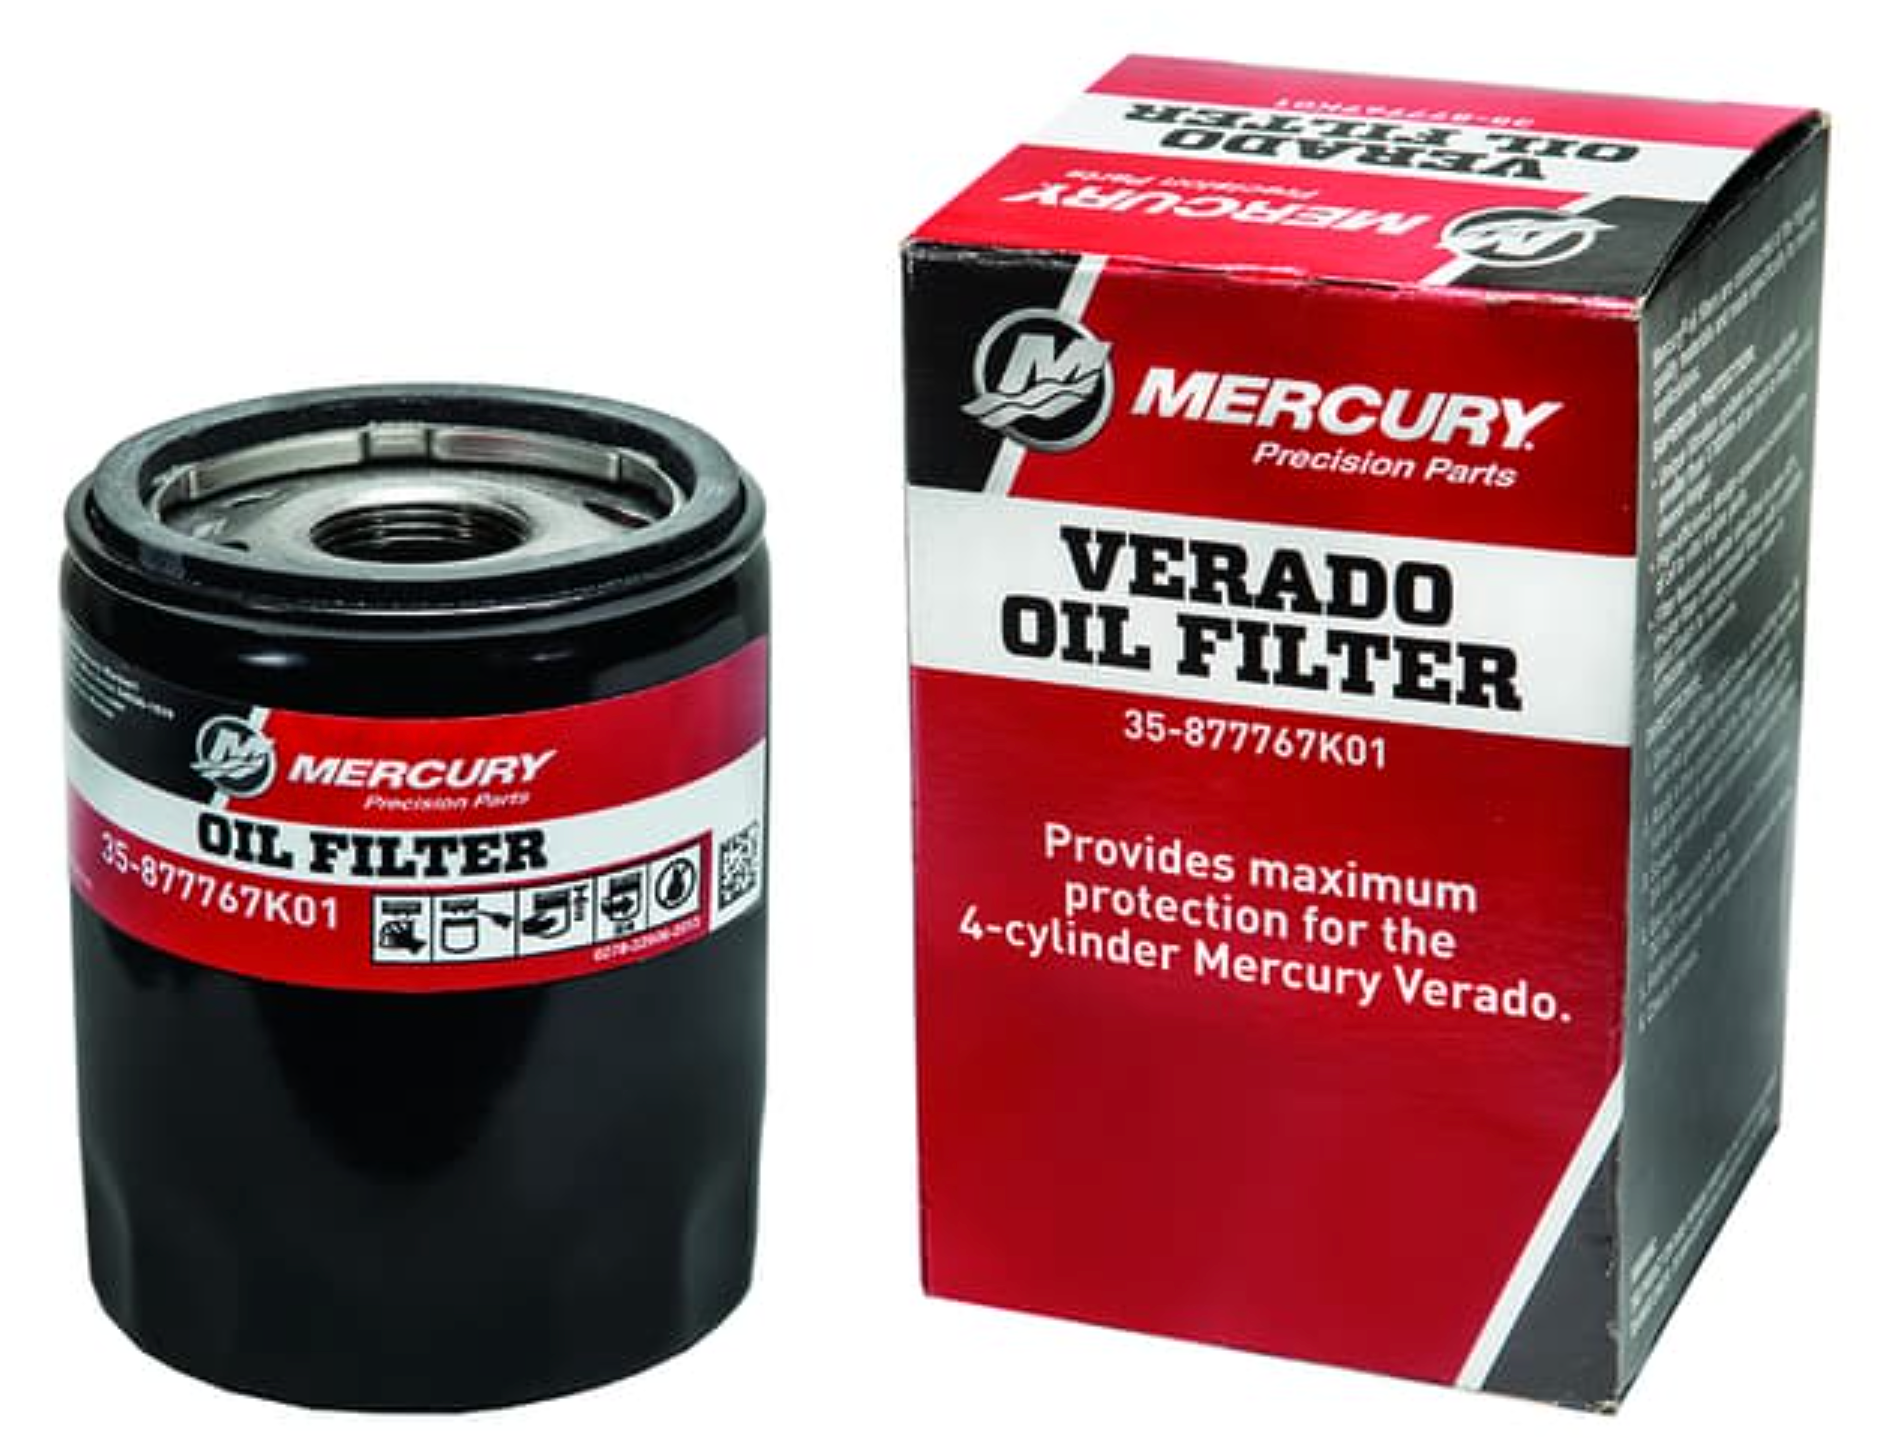 Verado Oil Filter P/N: 877767K01